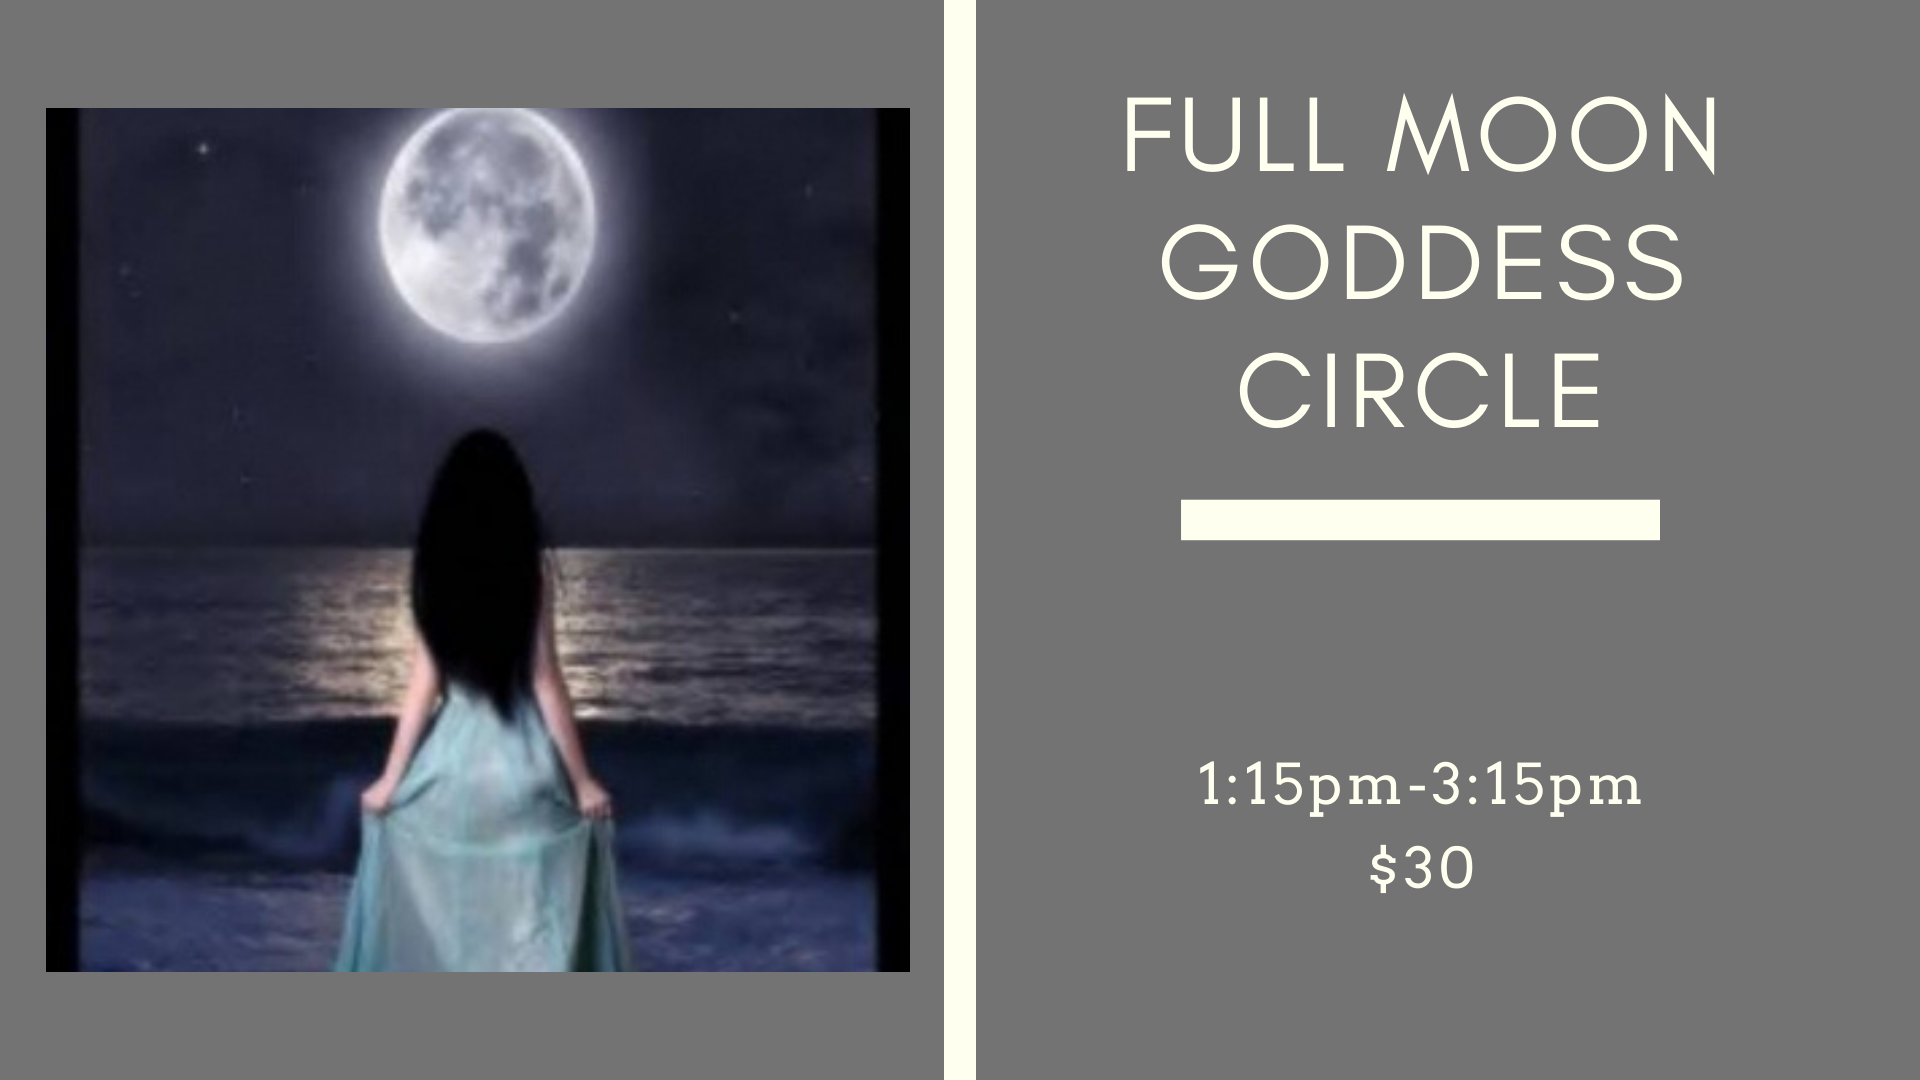 Full Moon Goddess Circles